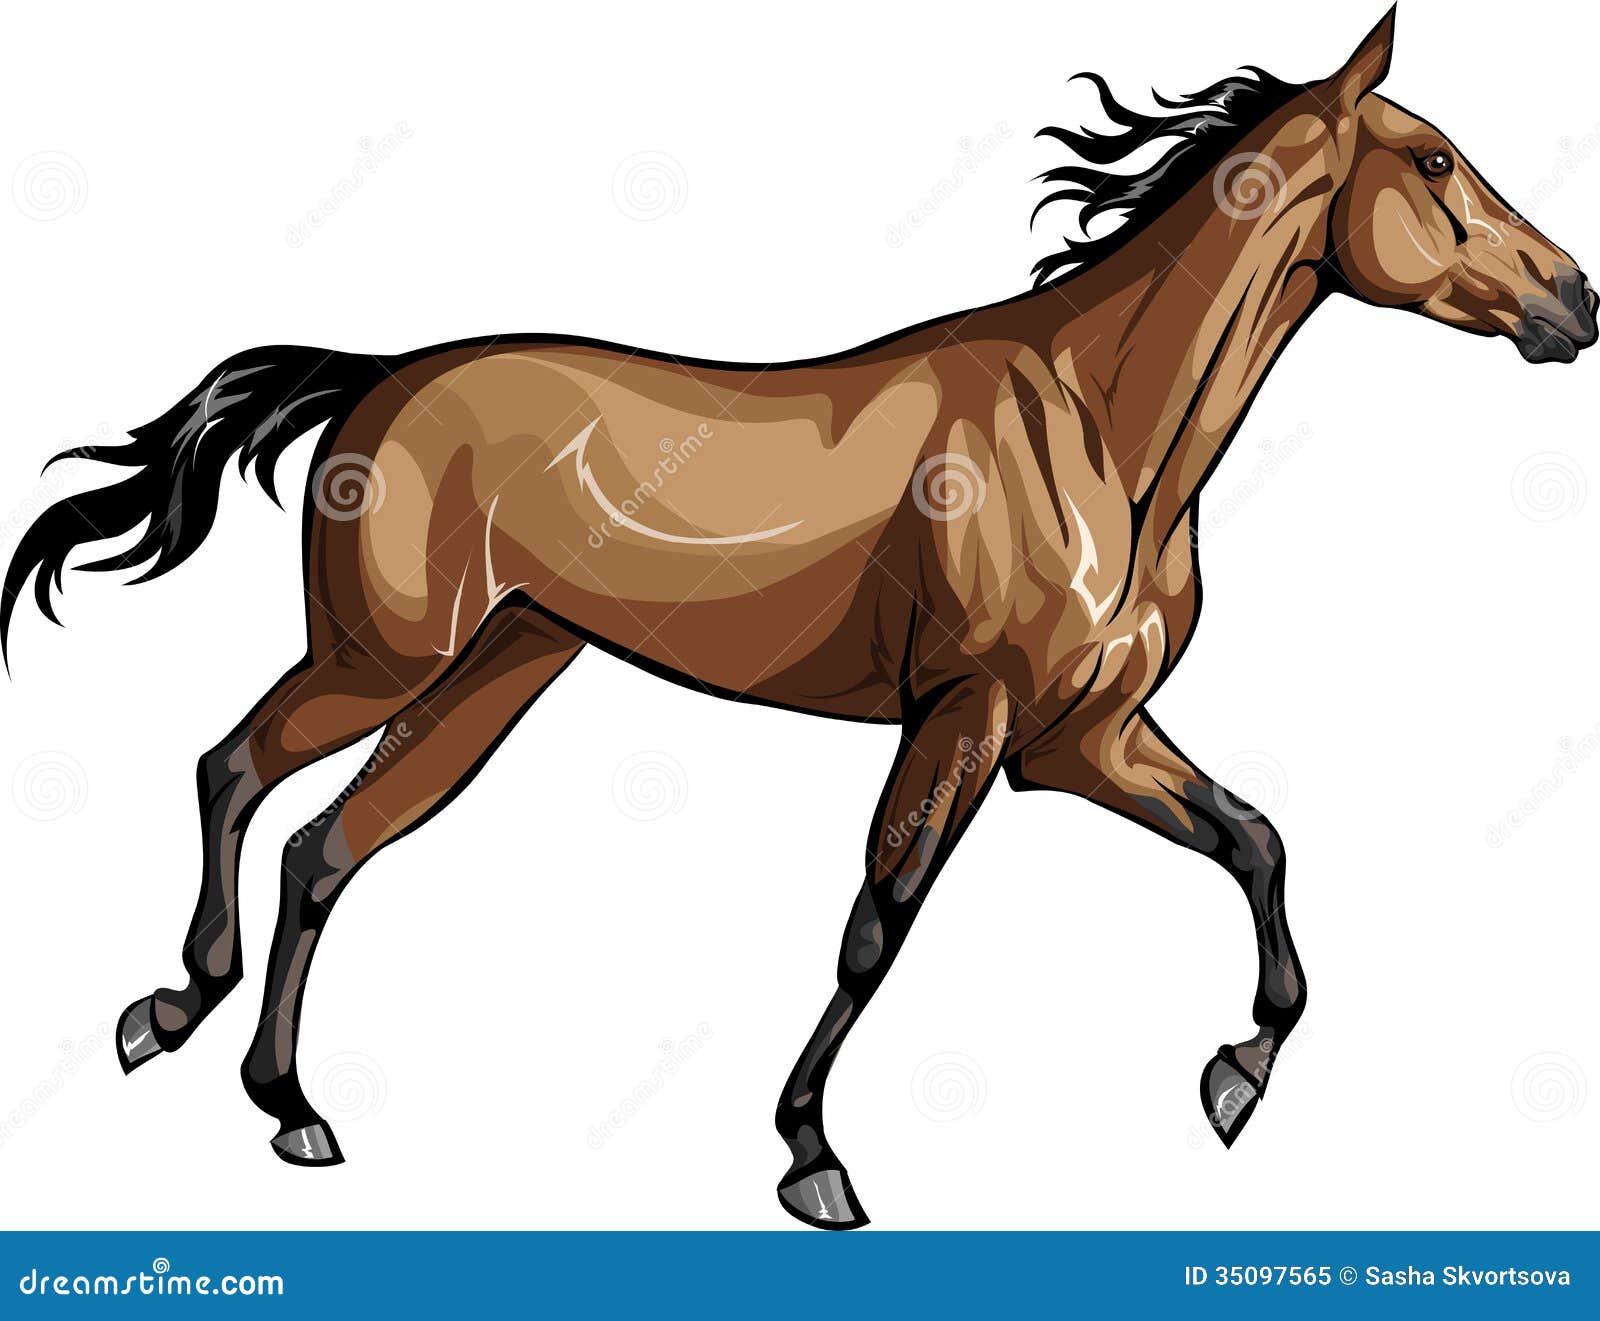 race horse clipart free - photo #31